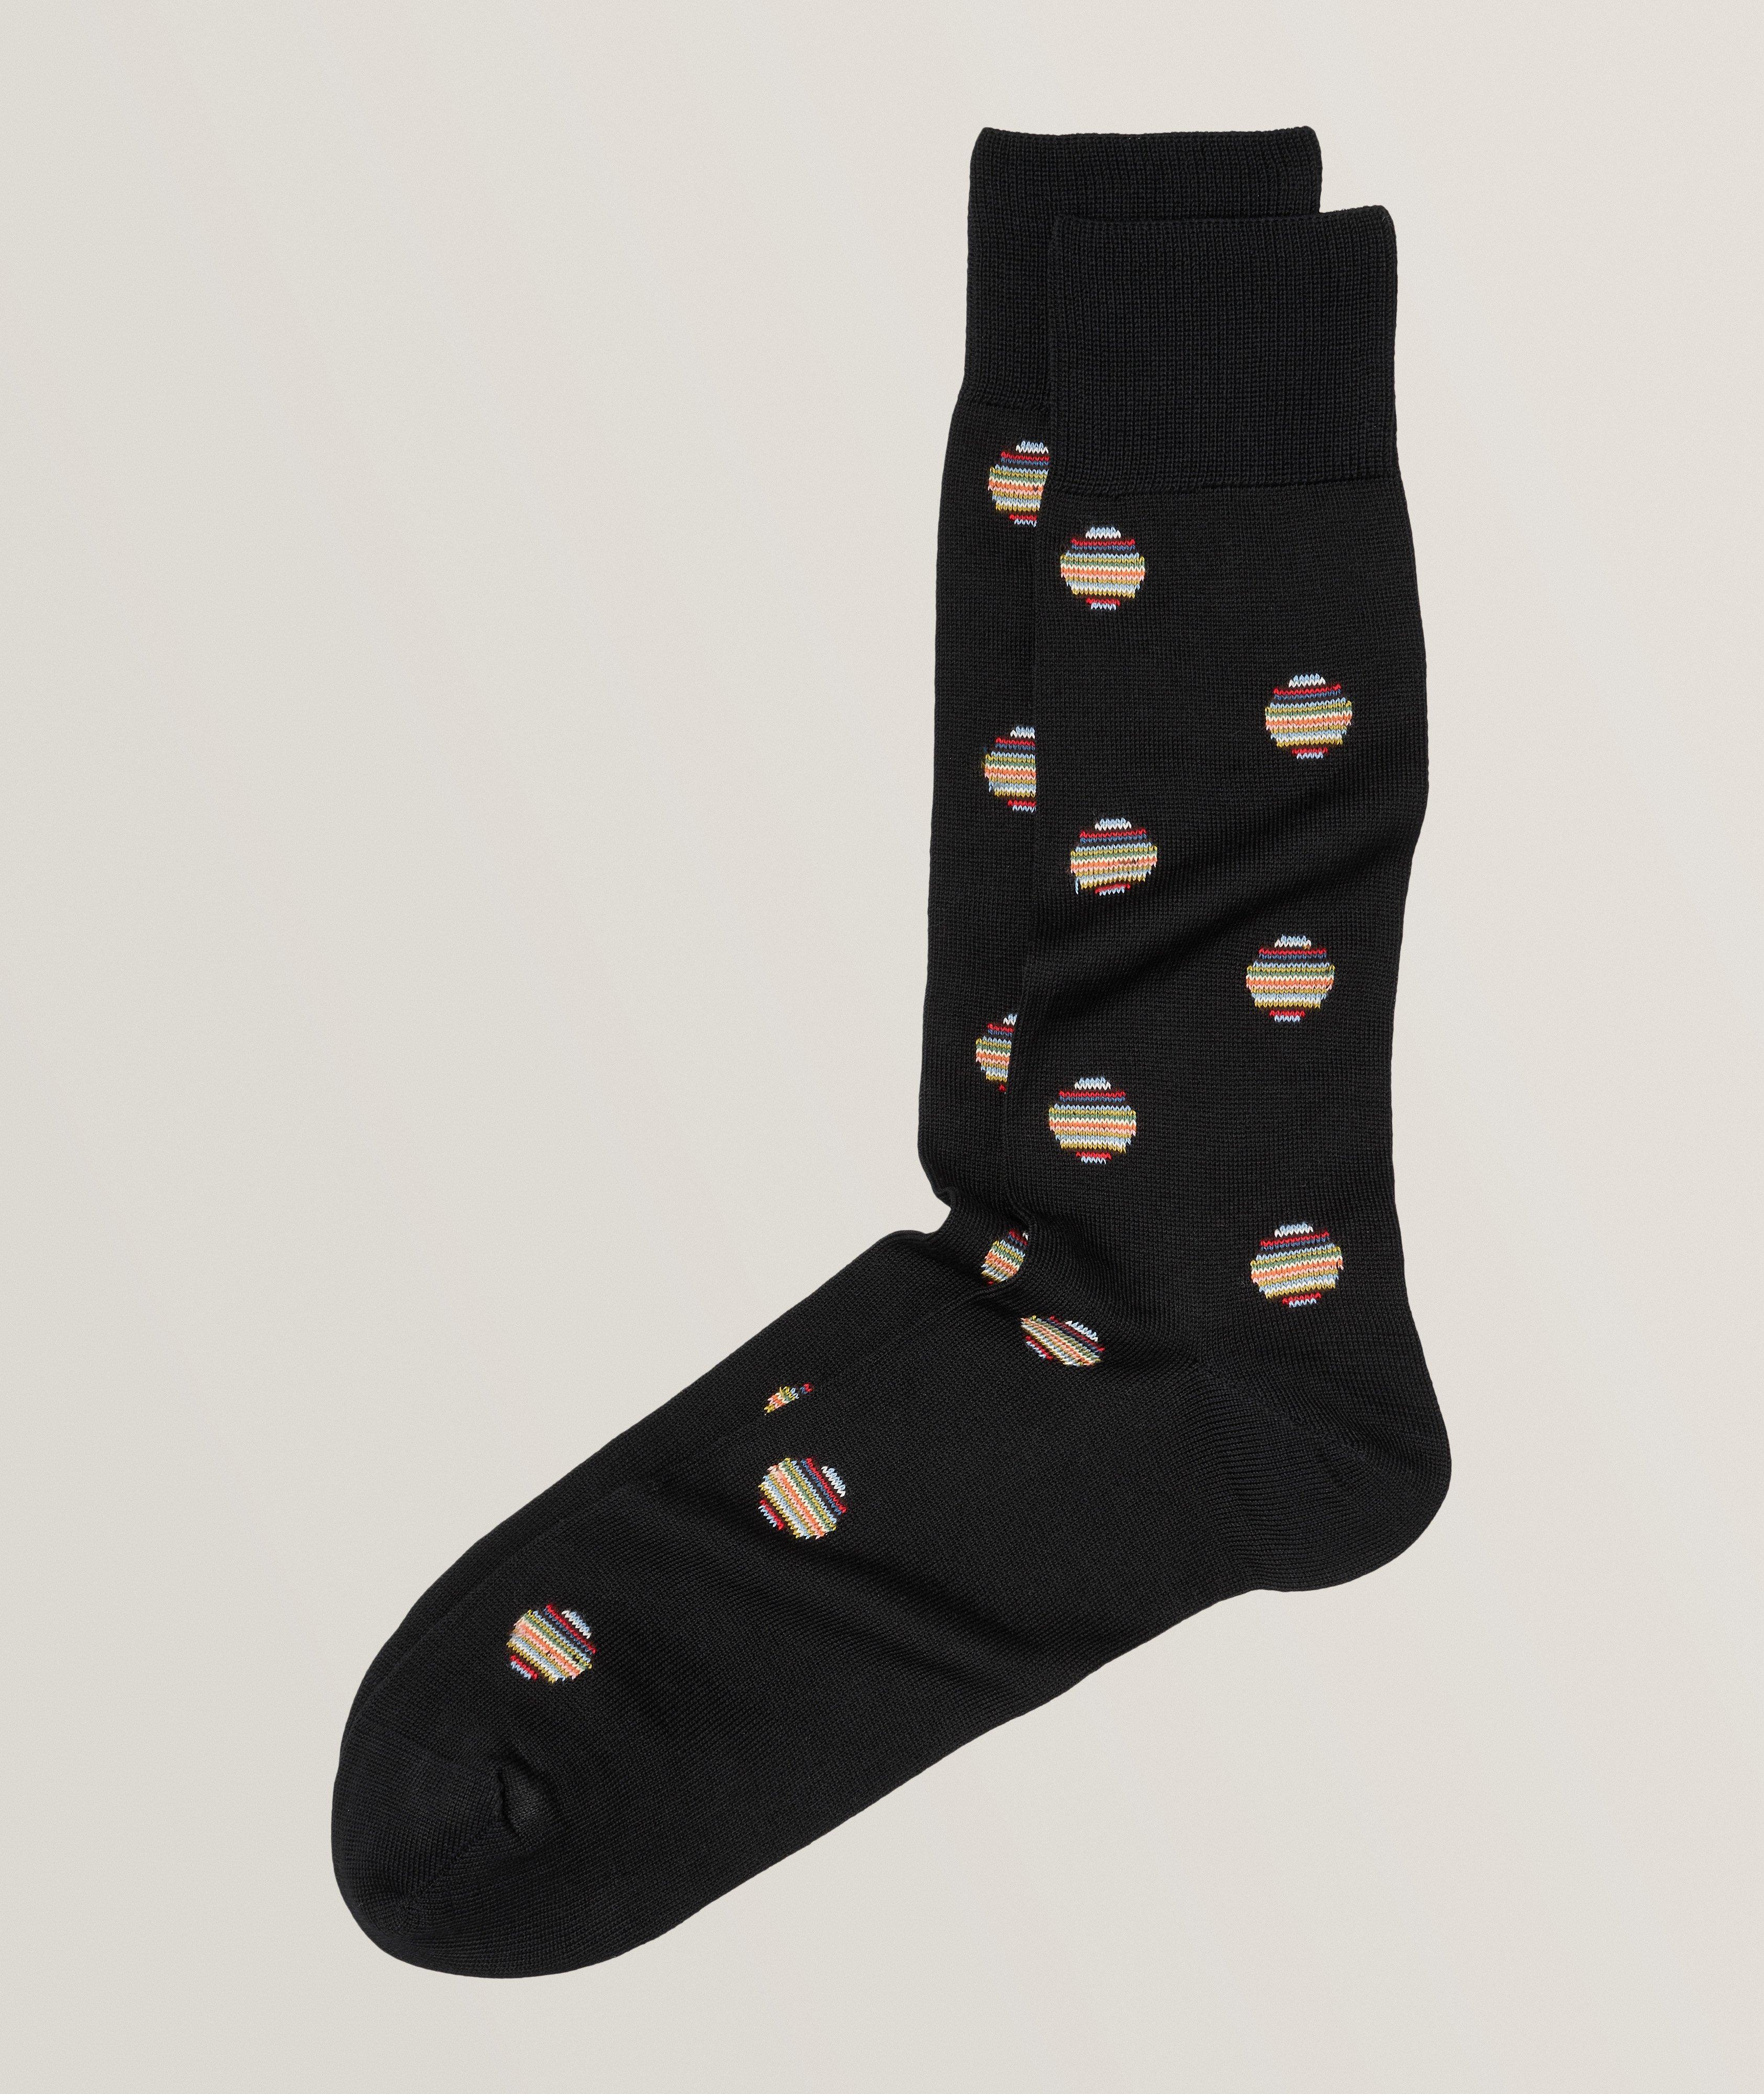 Signature Polka Dot Cotton-Blend Socks  image 0